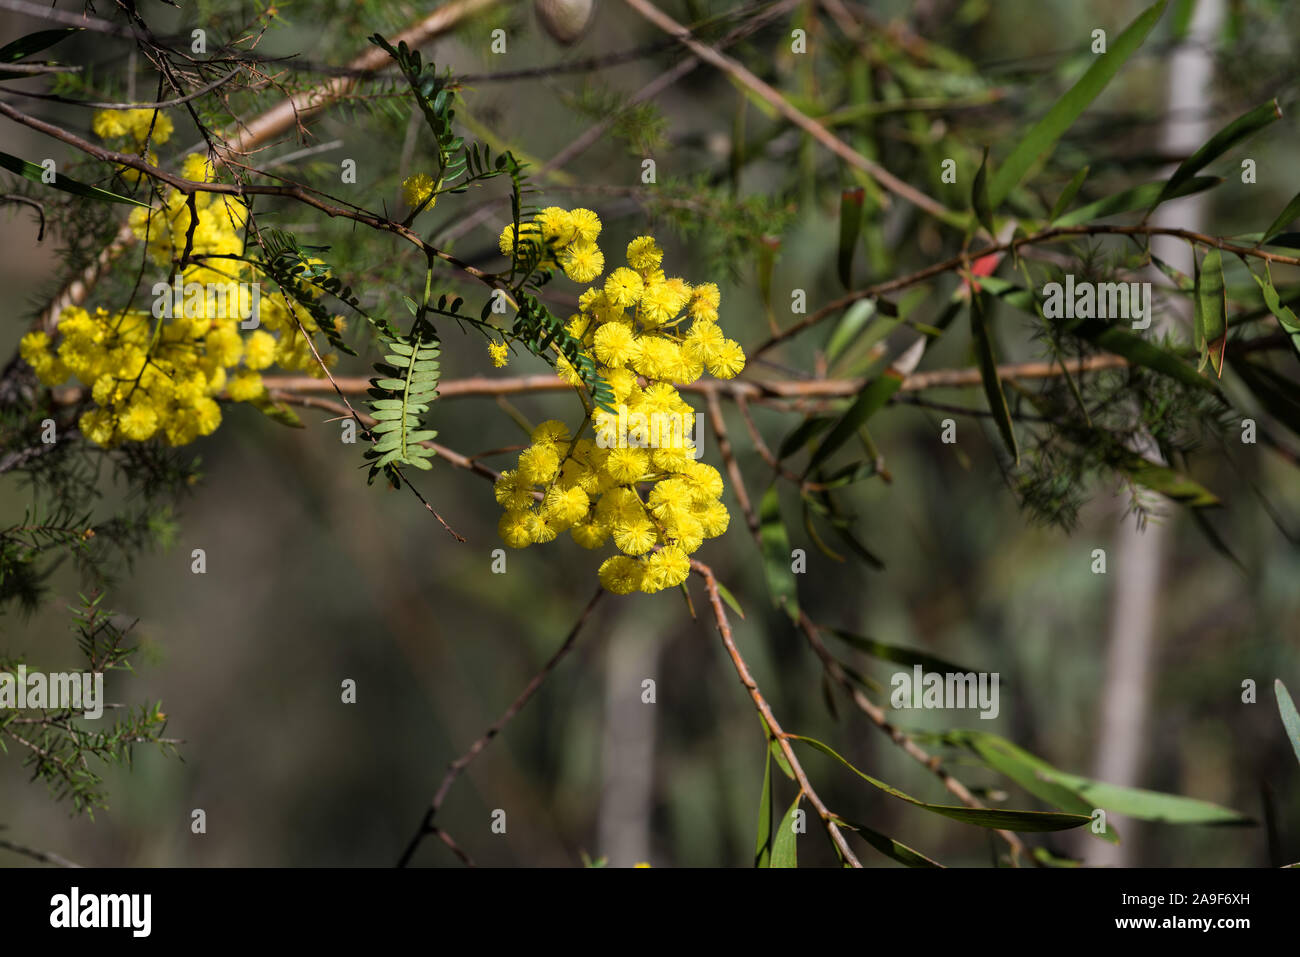 Acacia flowers close up. Australian wattle nature background Stock Photo